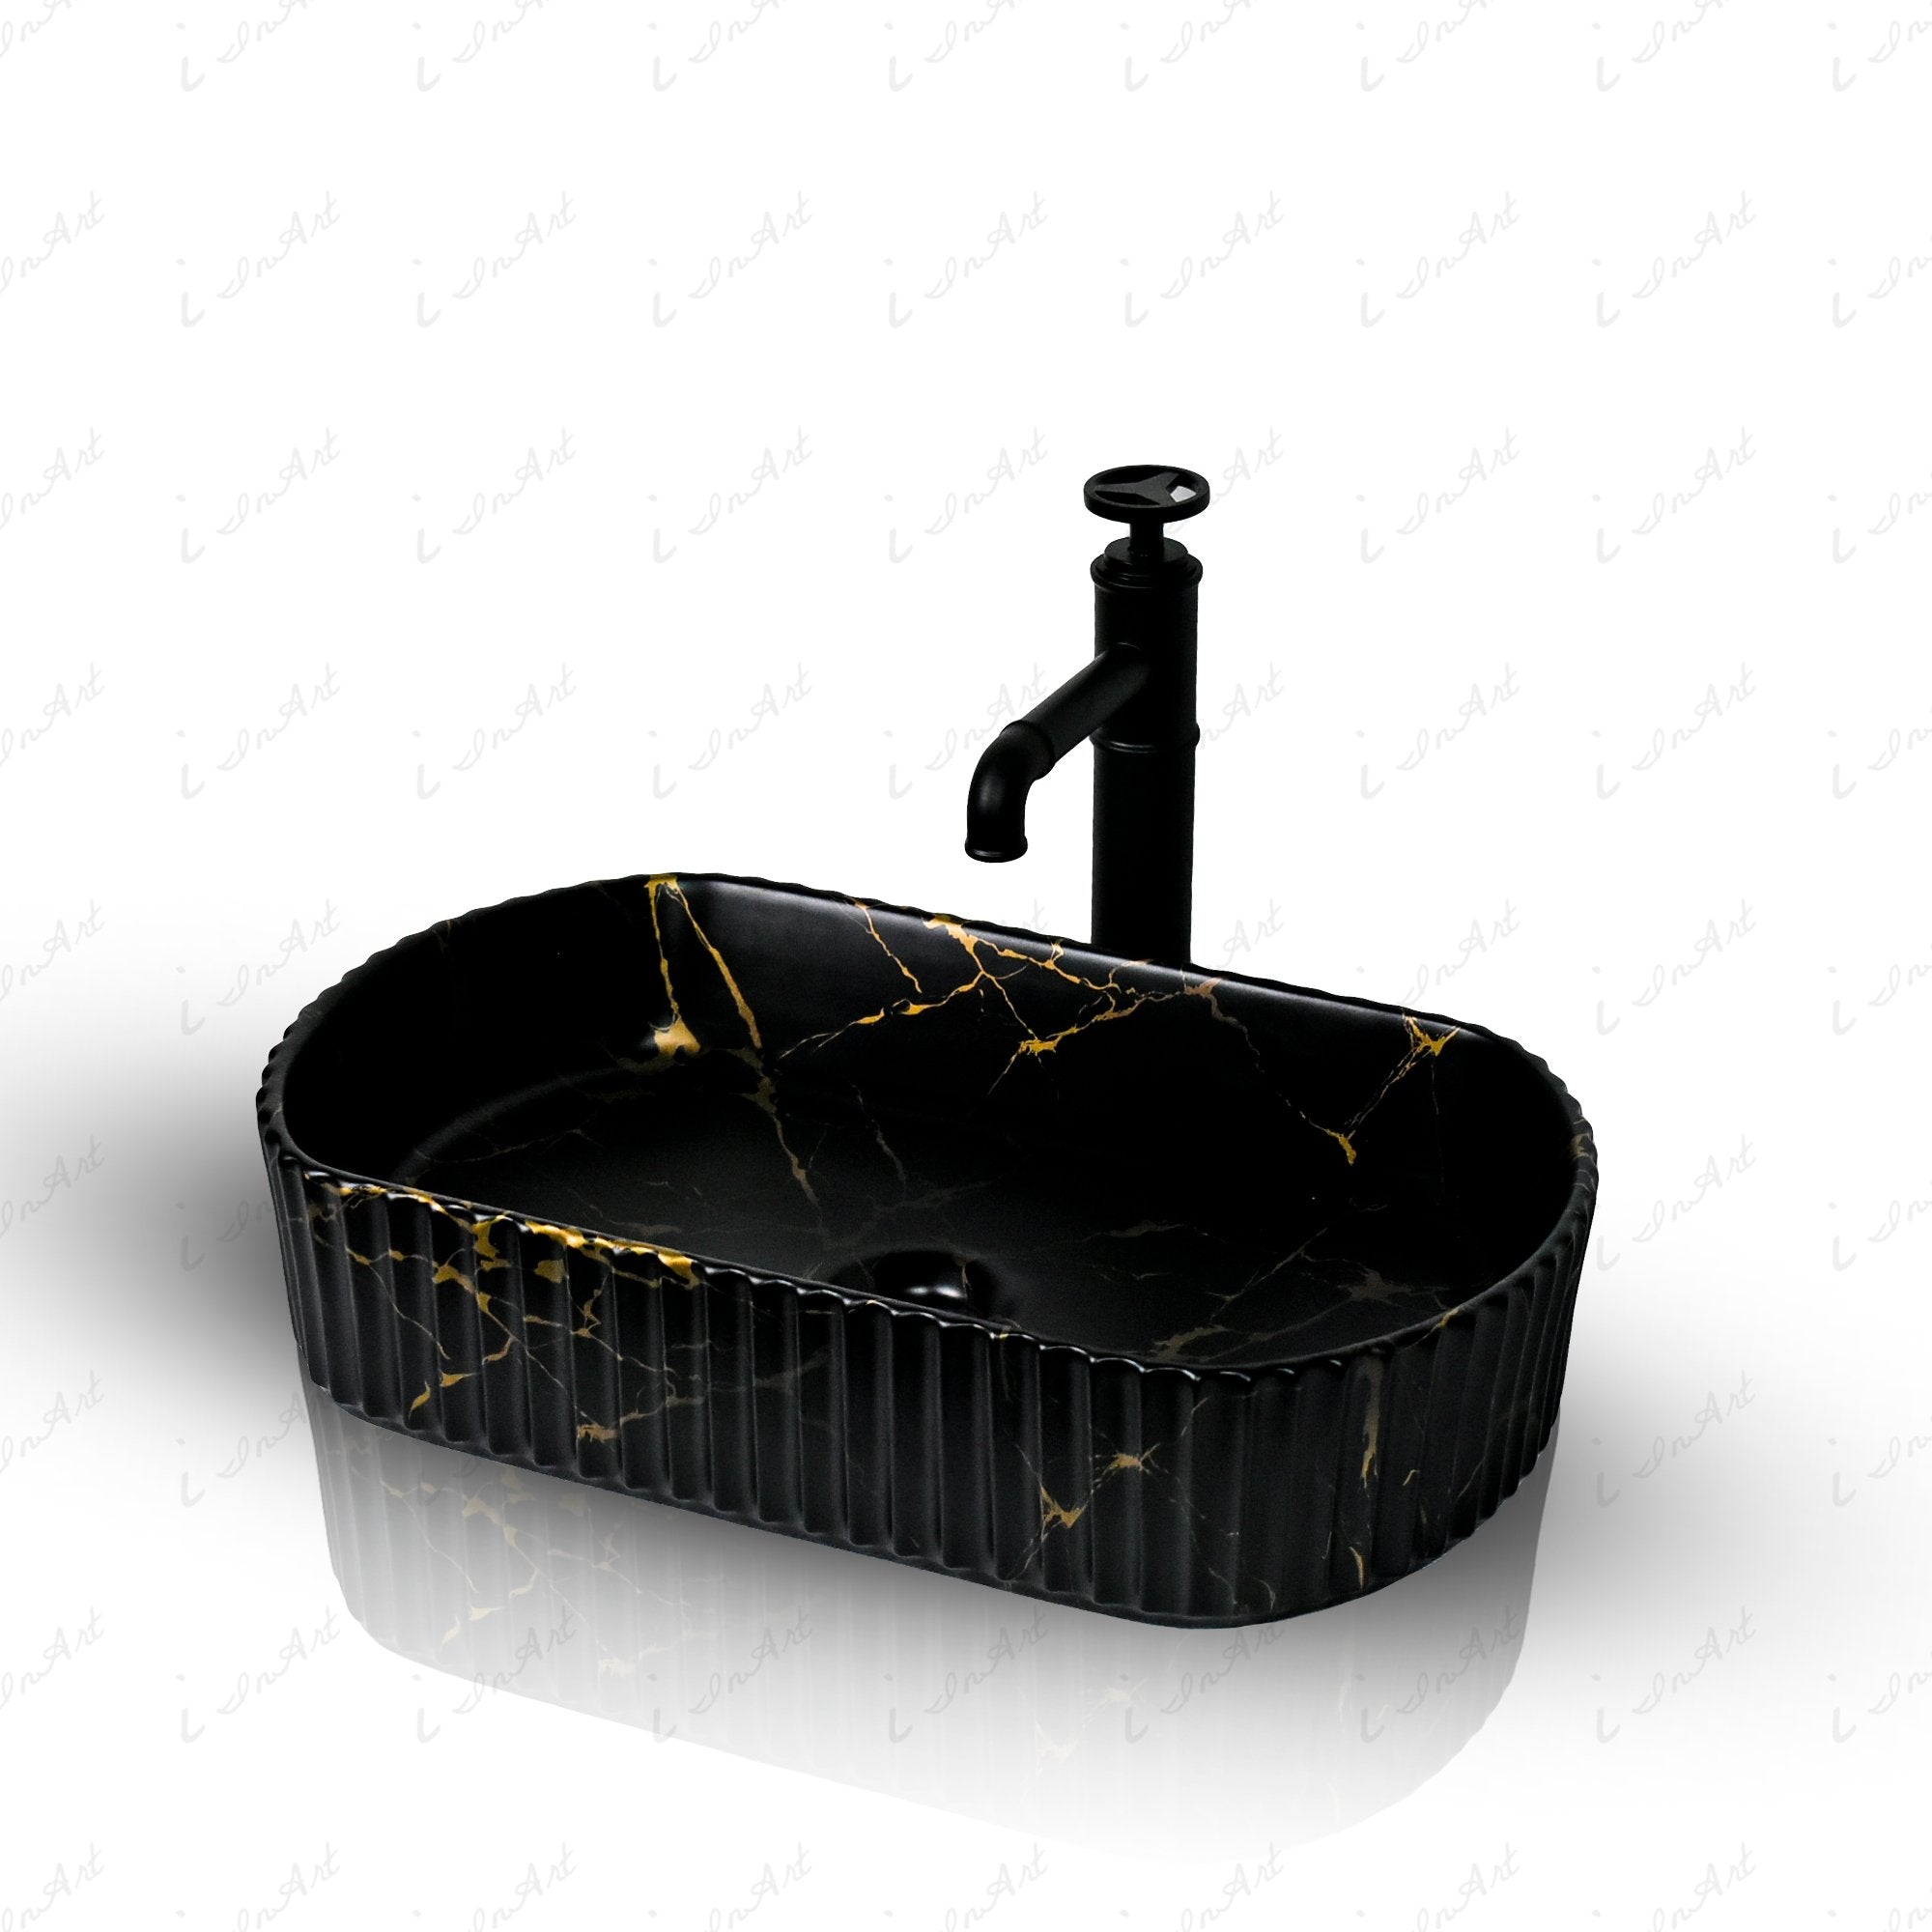 InArt Oval Bathroom Ceramic Vessel Sink Art Basin in Matt Black Color 51 x 31 CM - InArt-Studio-USA